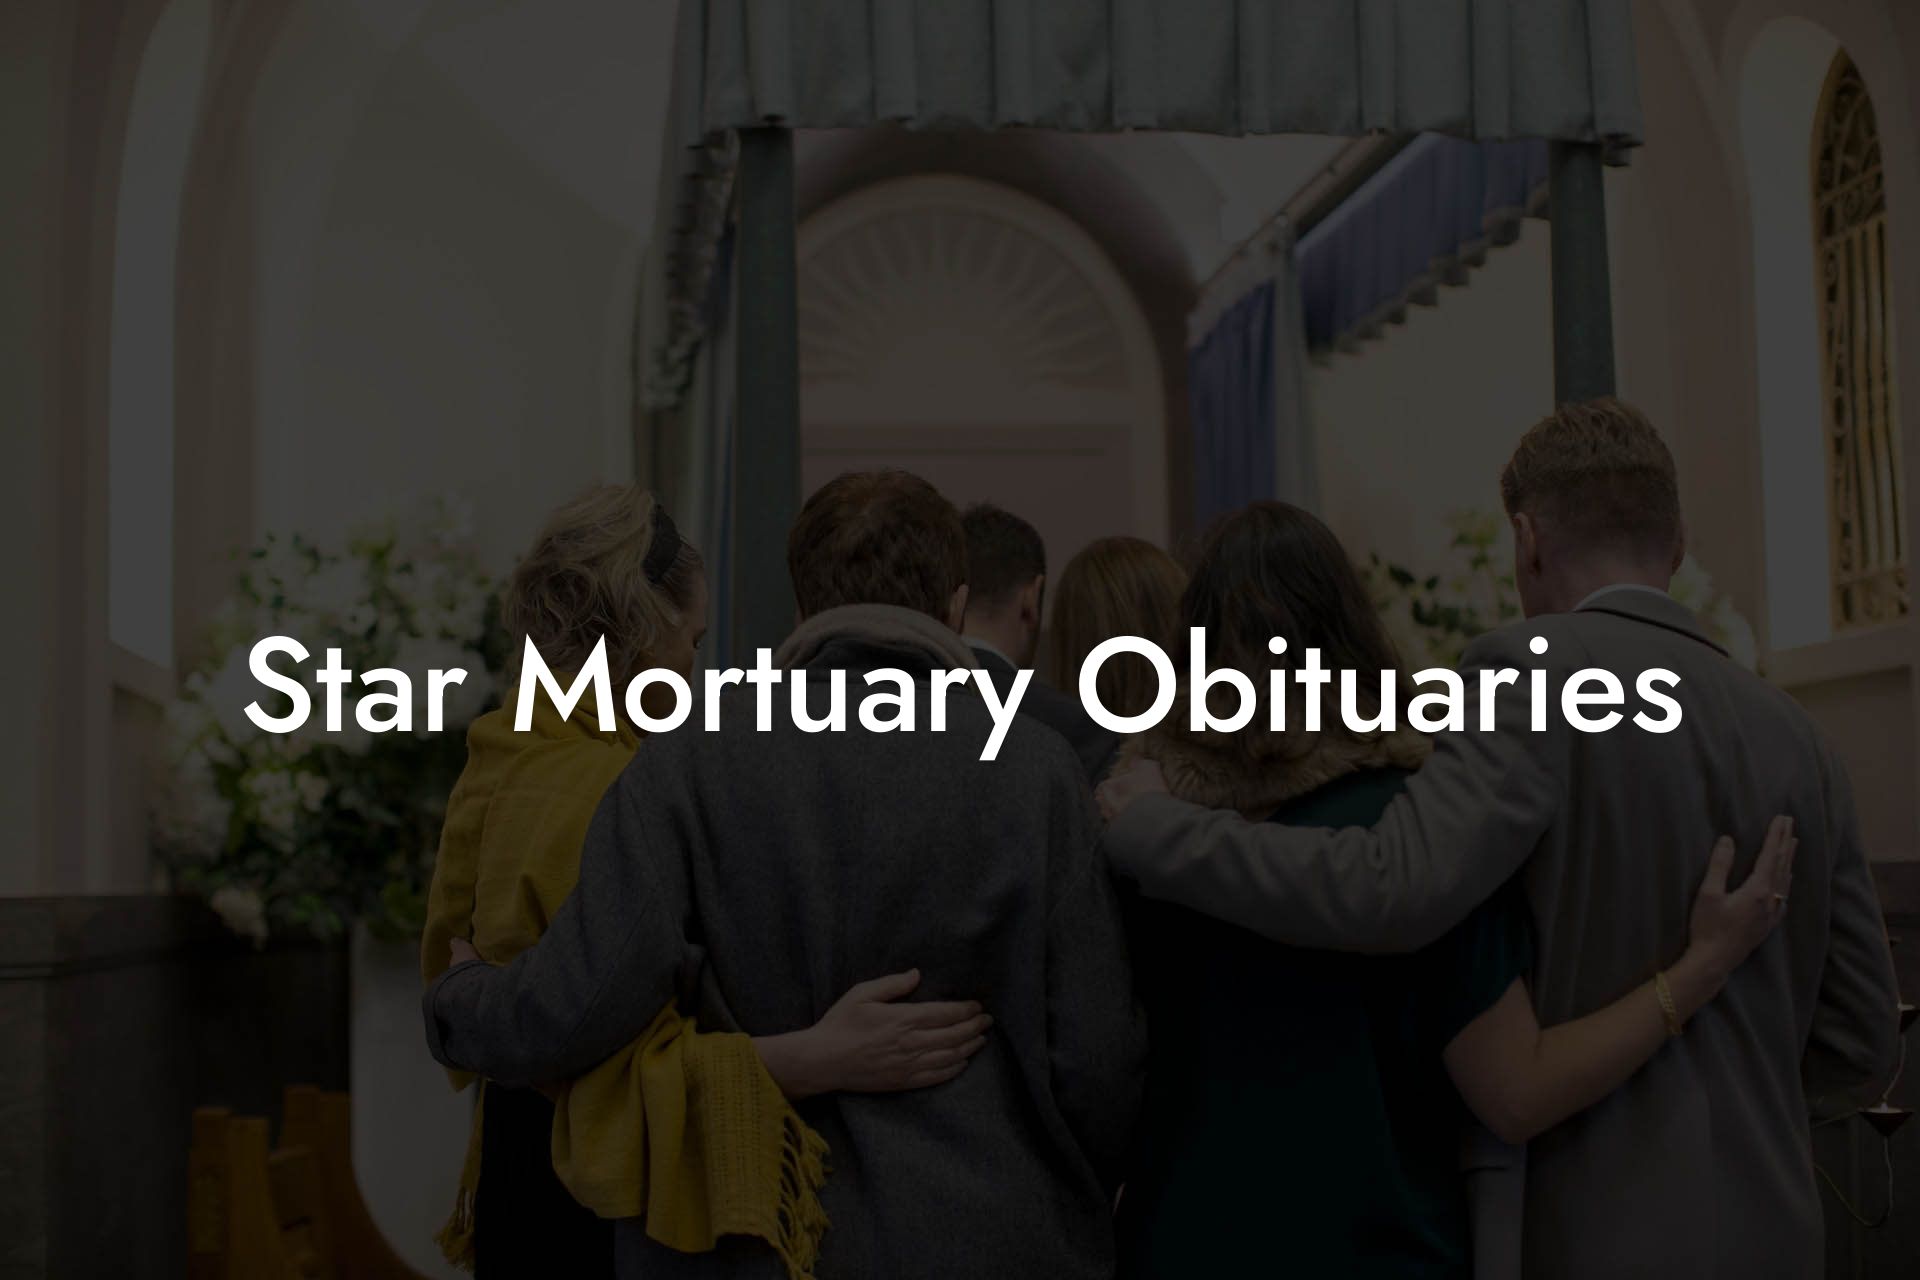 Star Mortuary Obituaries